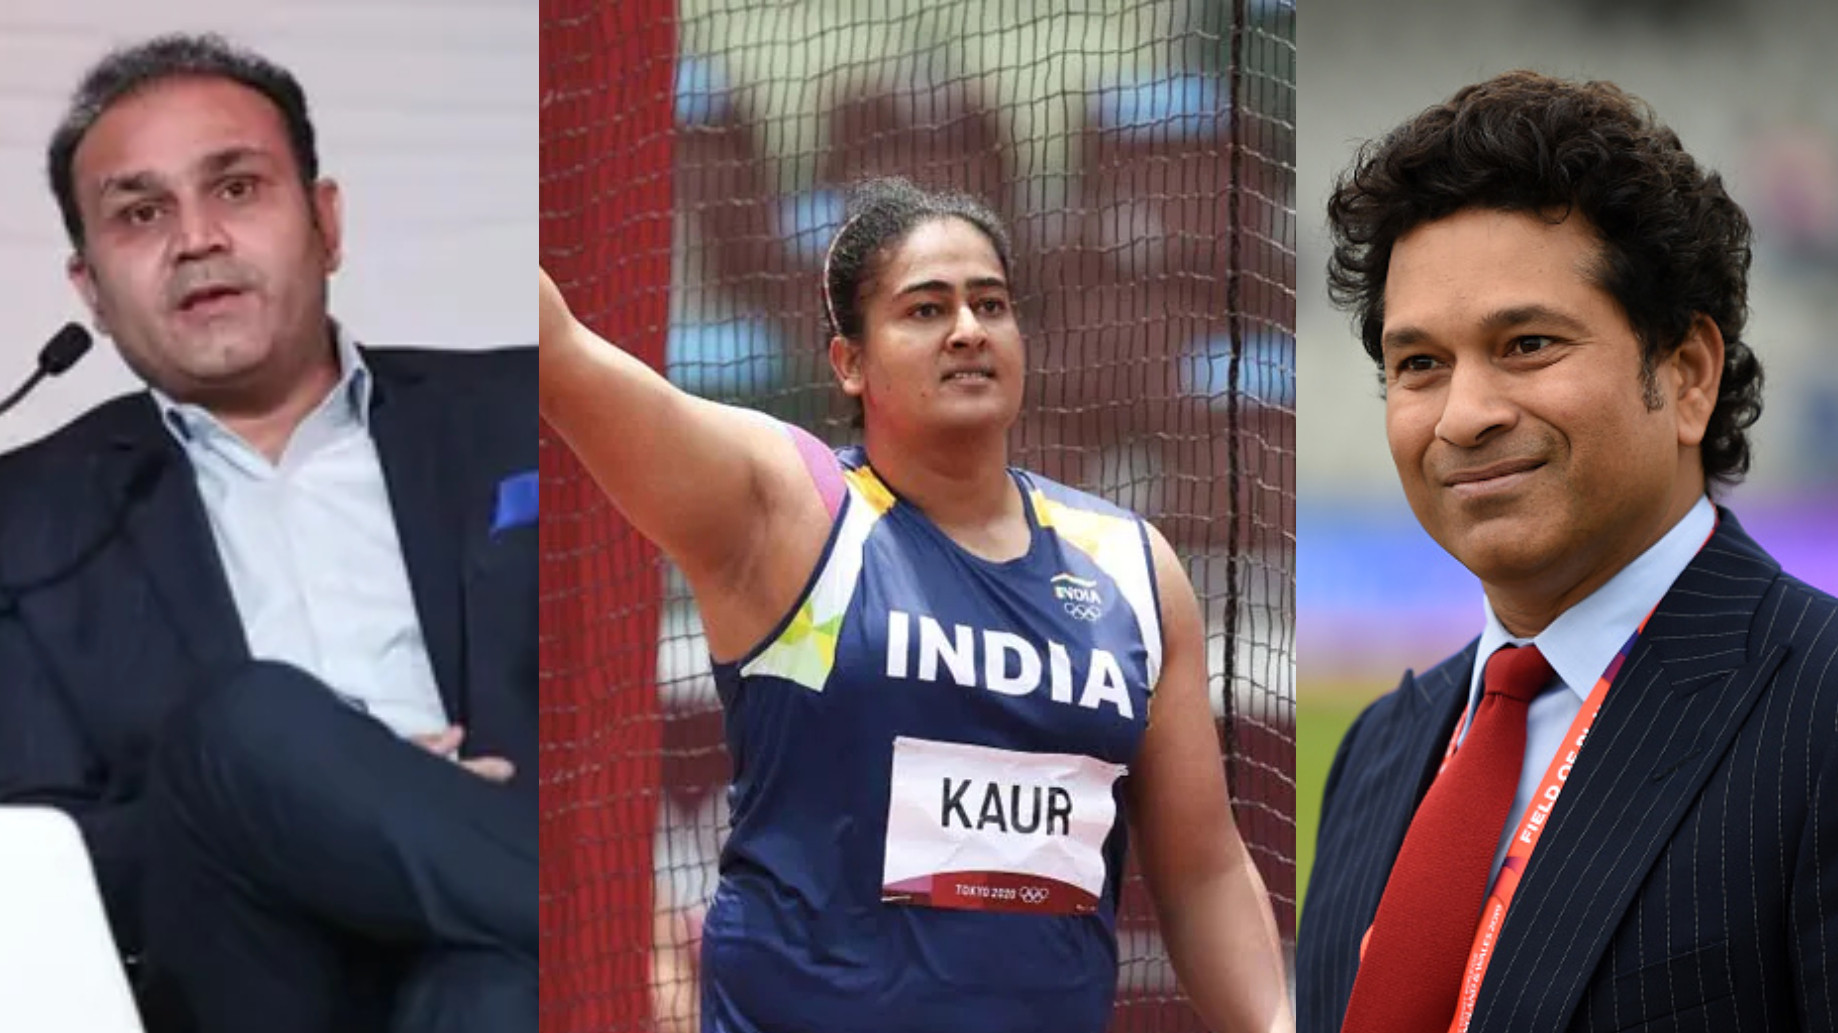 Sachin Tendulkar and Virender Sehwag praise Kamalpreet Kaur's efforts in Tokyo Olympics 2020